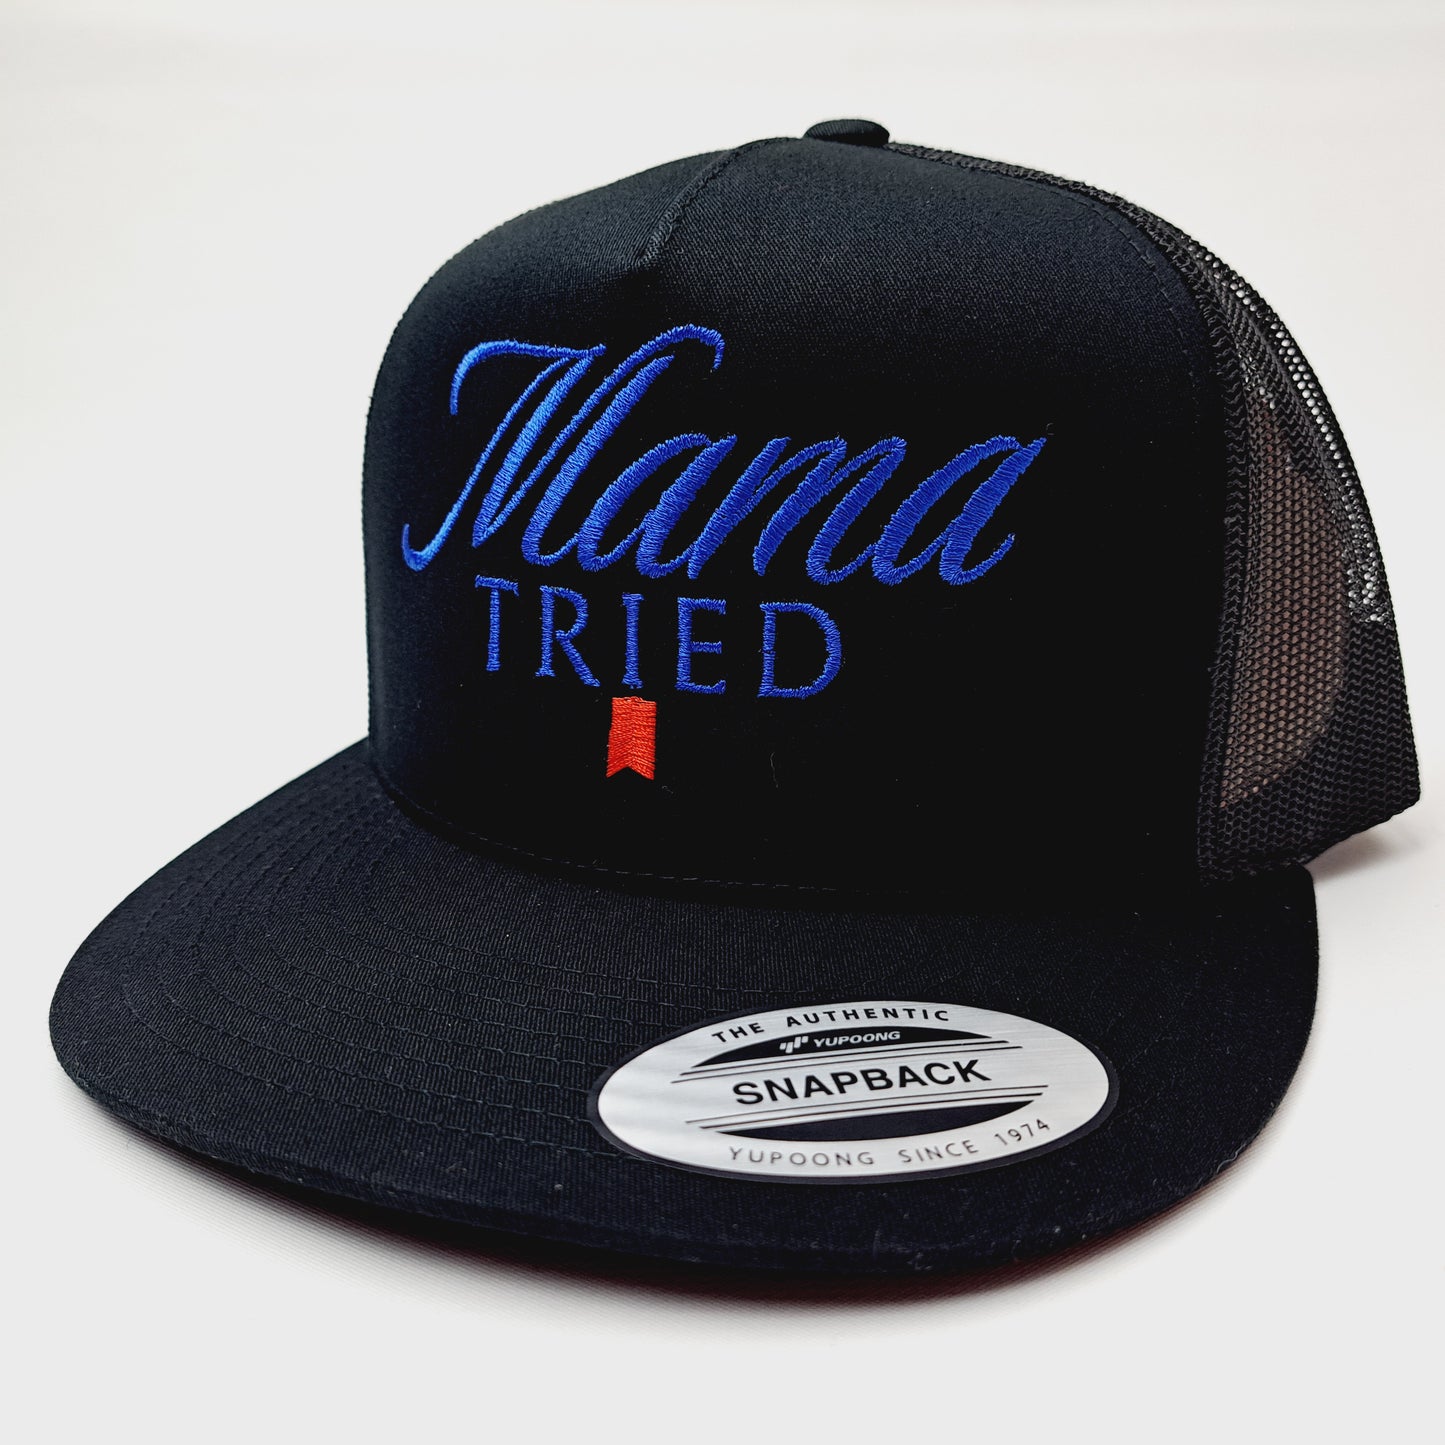 Mama Tried Flat Bill High-profile Trucker Mesh Snapback Cap Hat Black